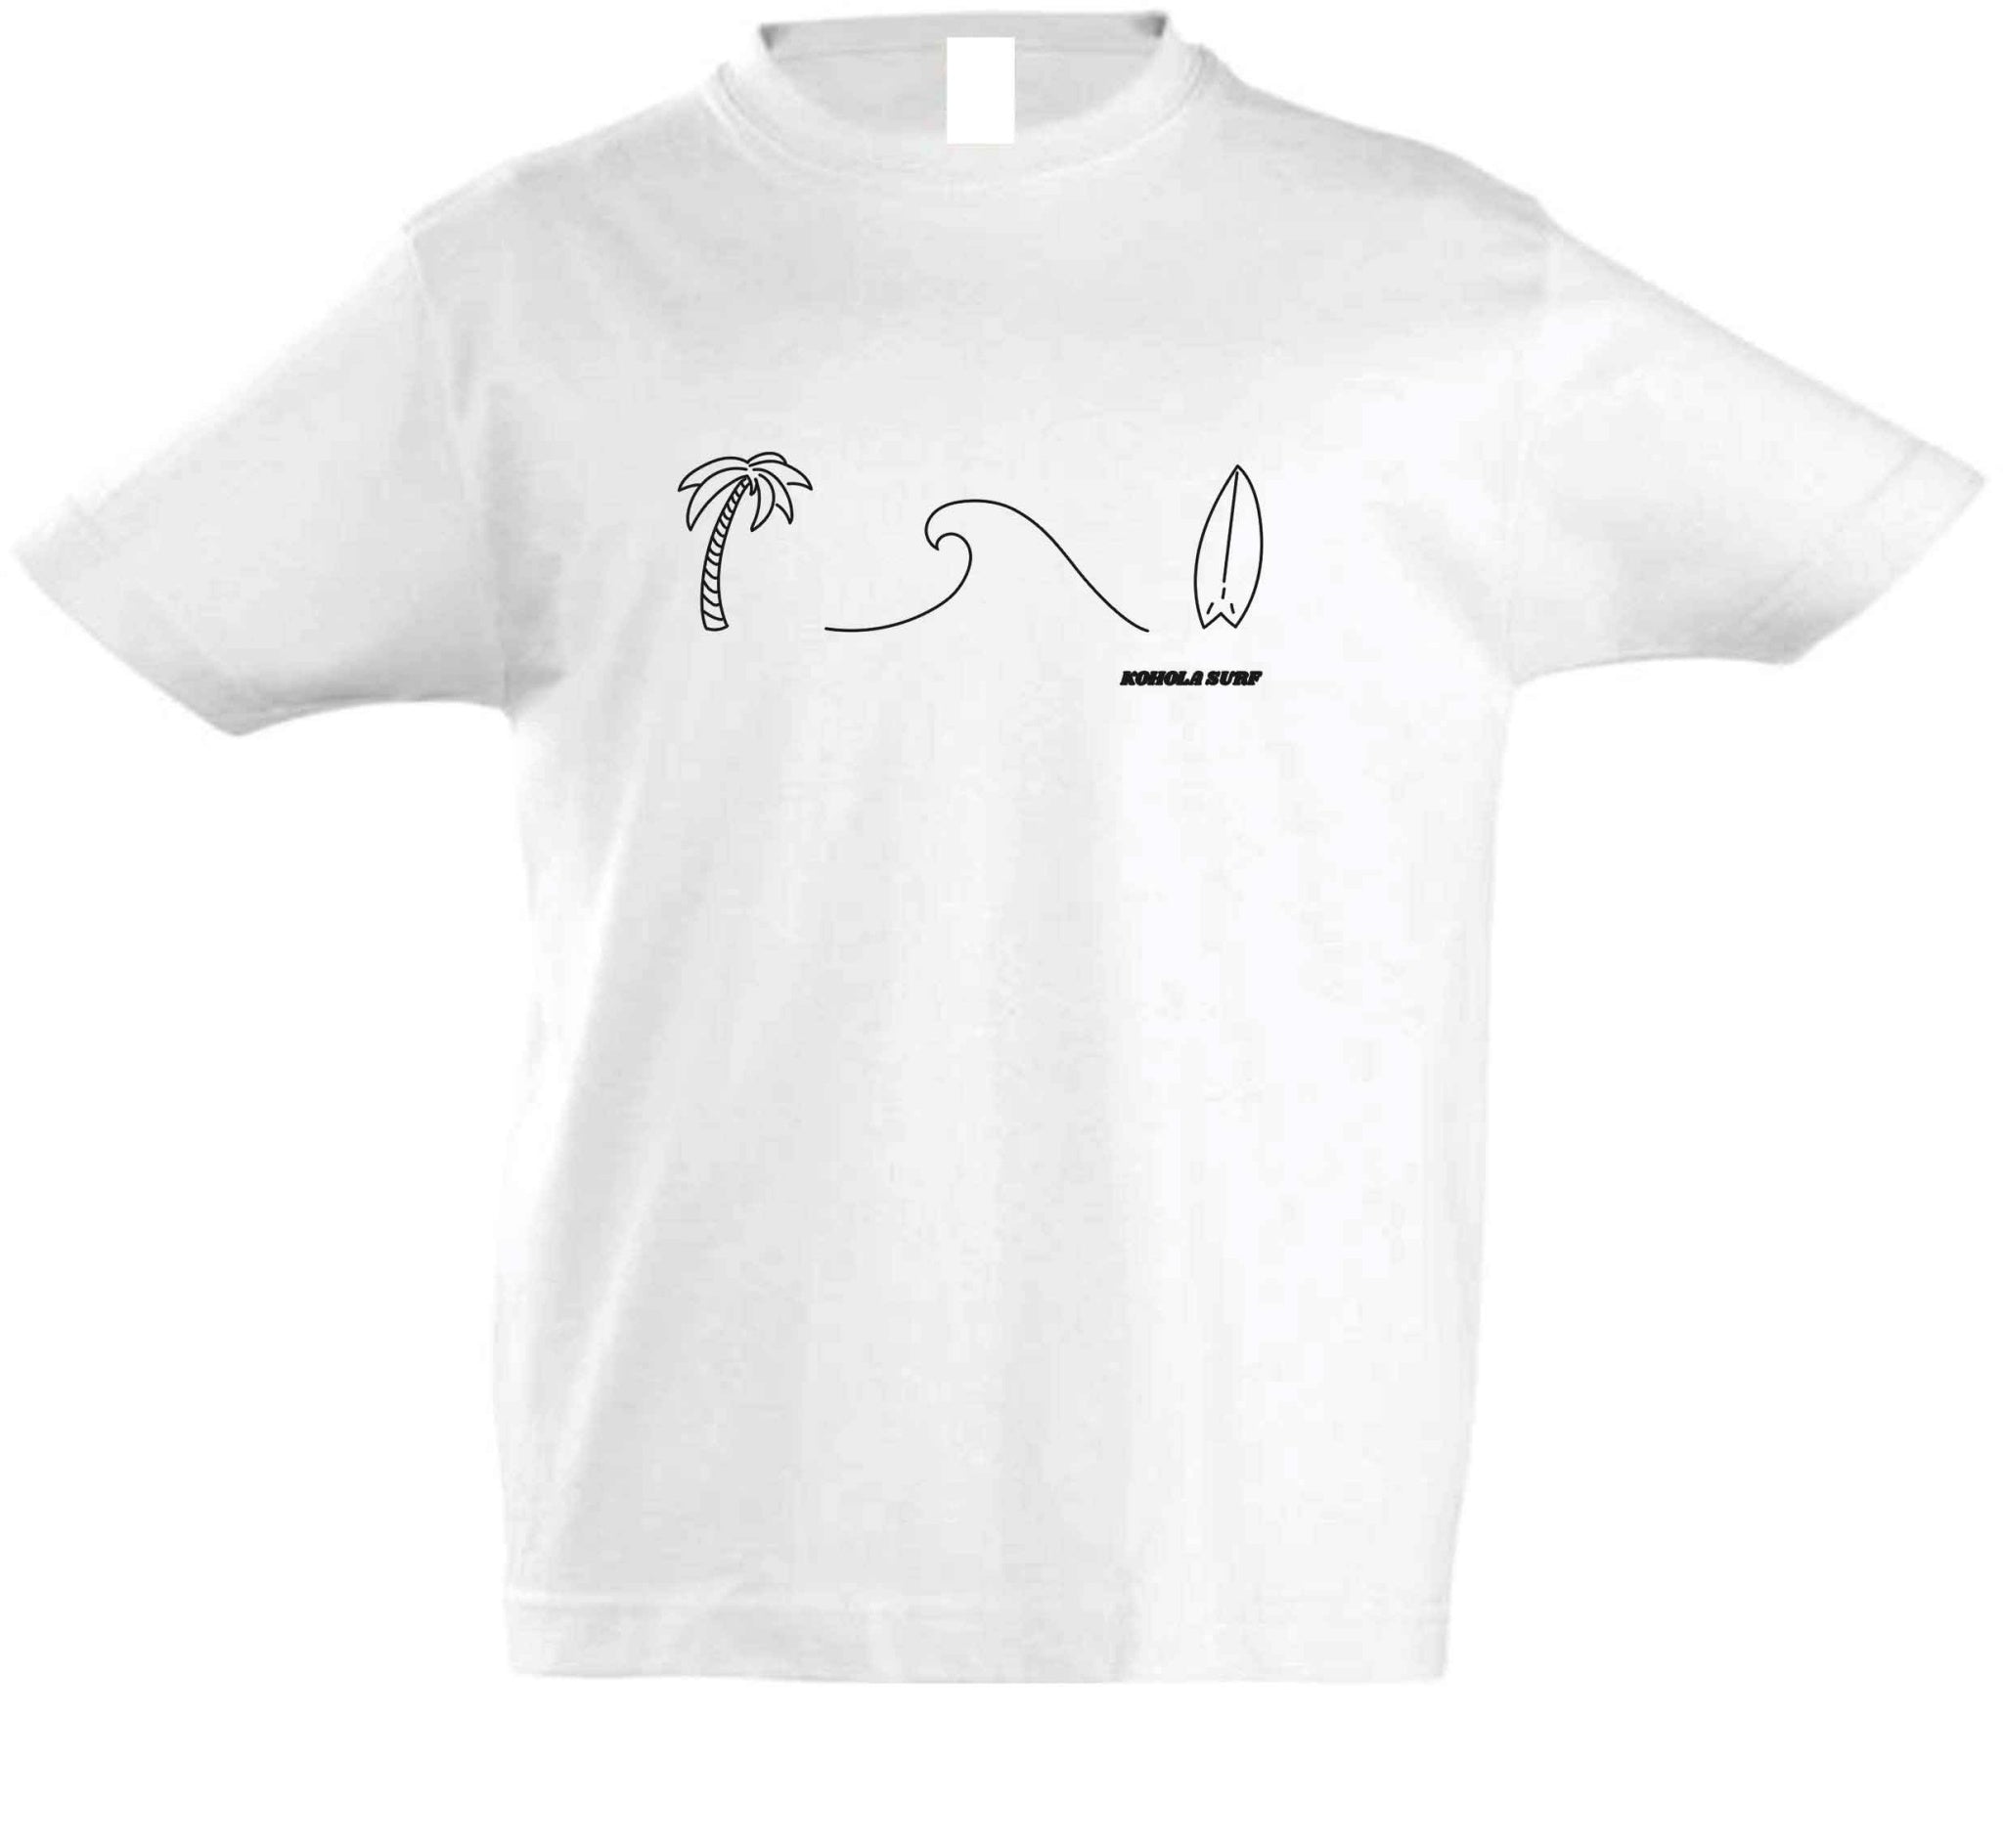 Palm Trees & Waves Kids T-Shirt